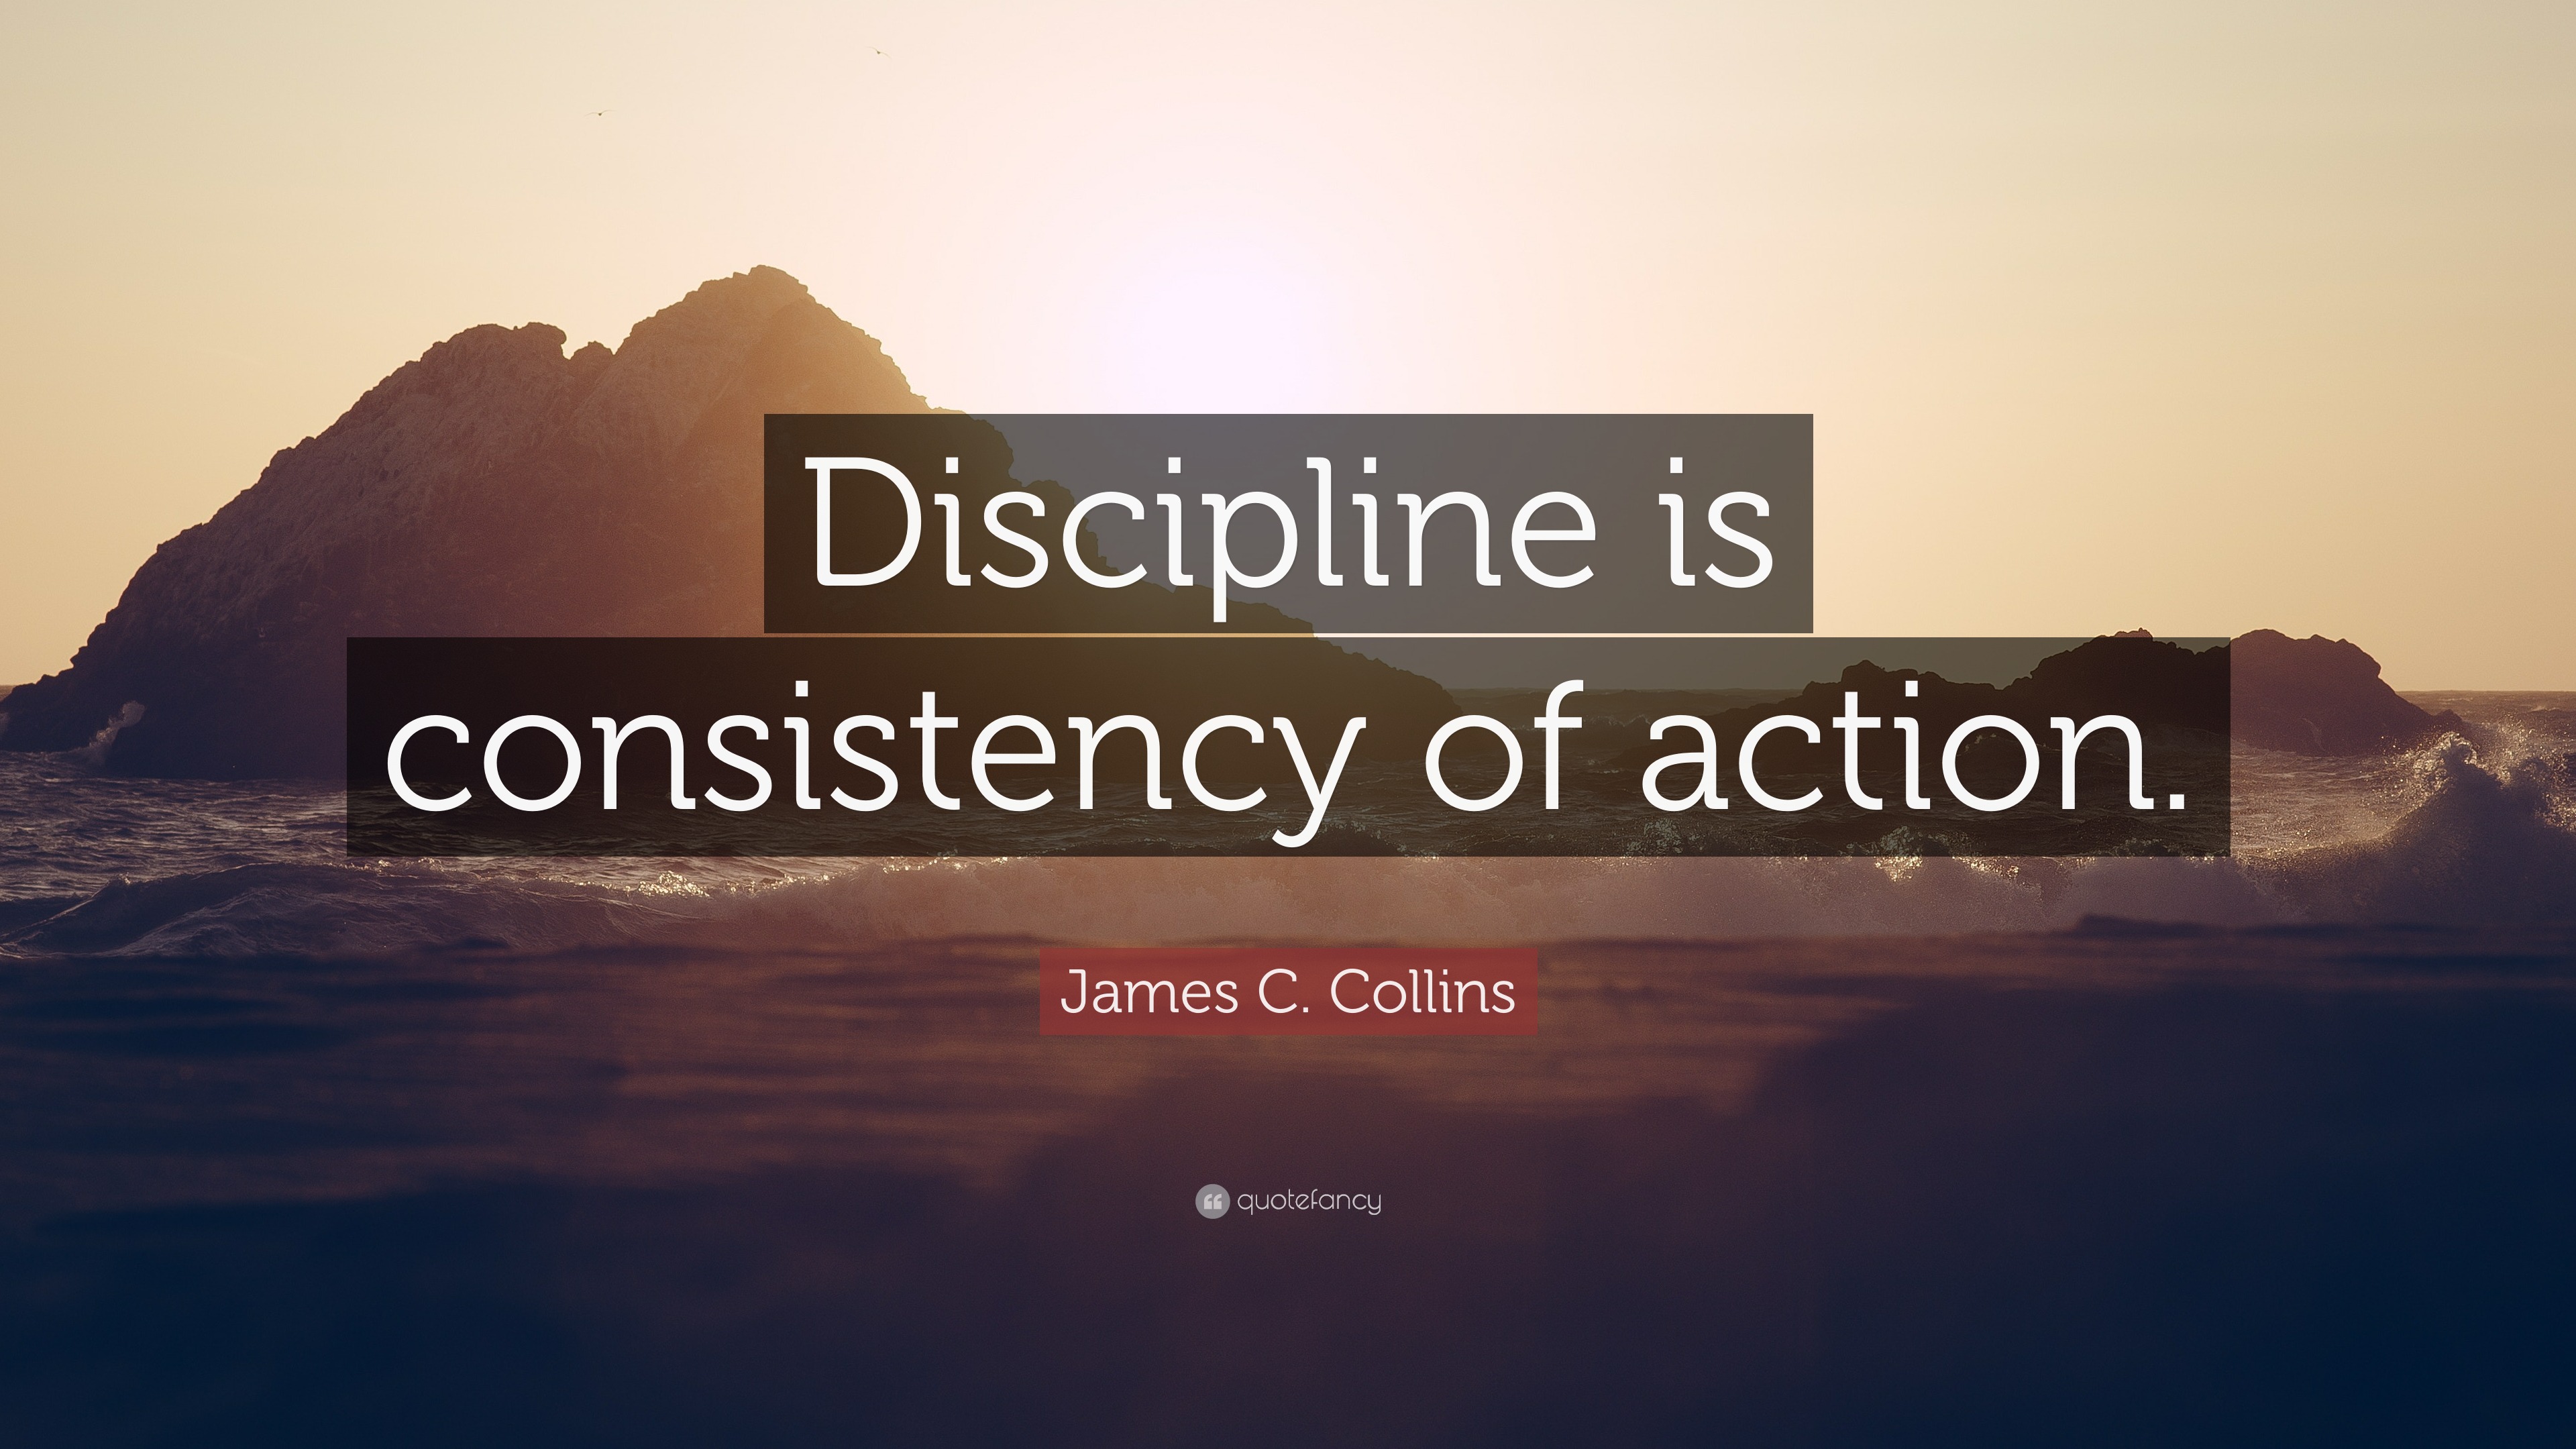 James C. Collins Quote: “Discipline is consistency of action.”